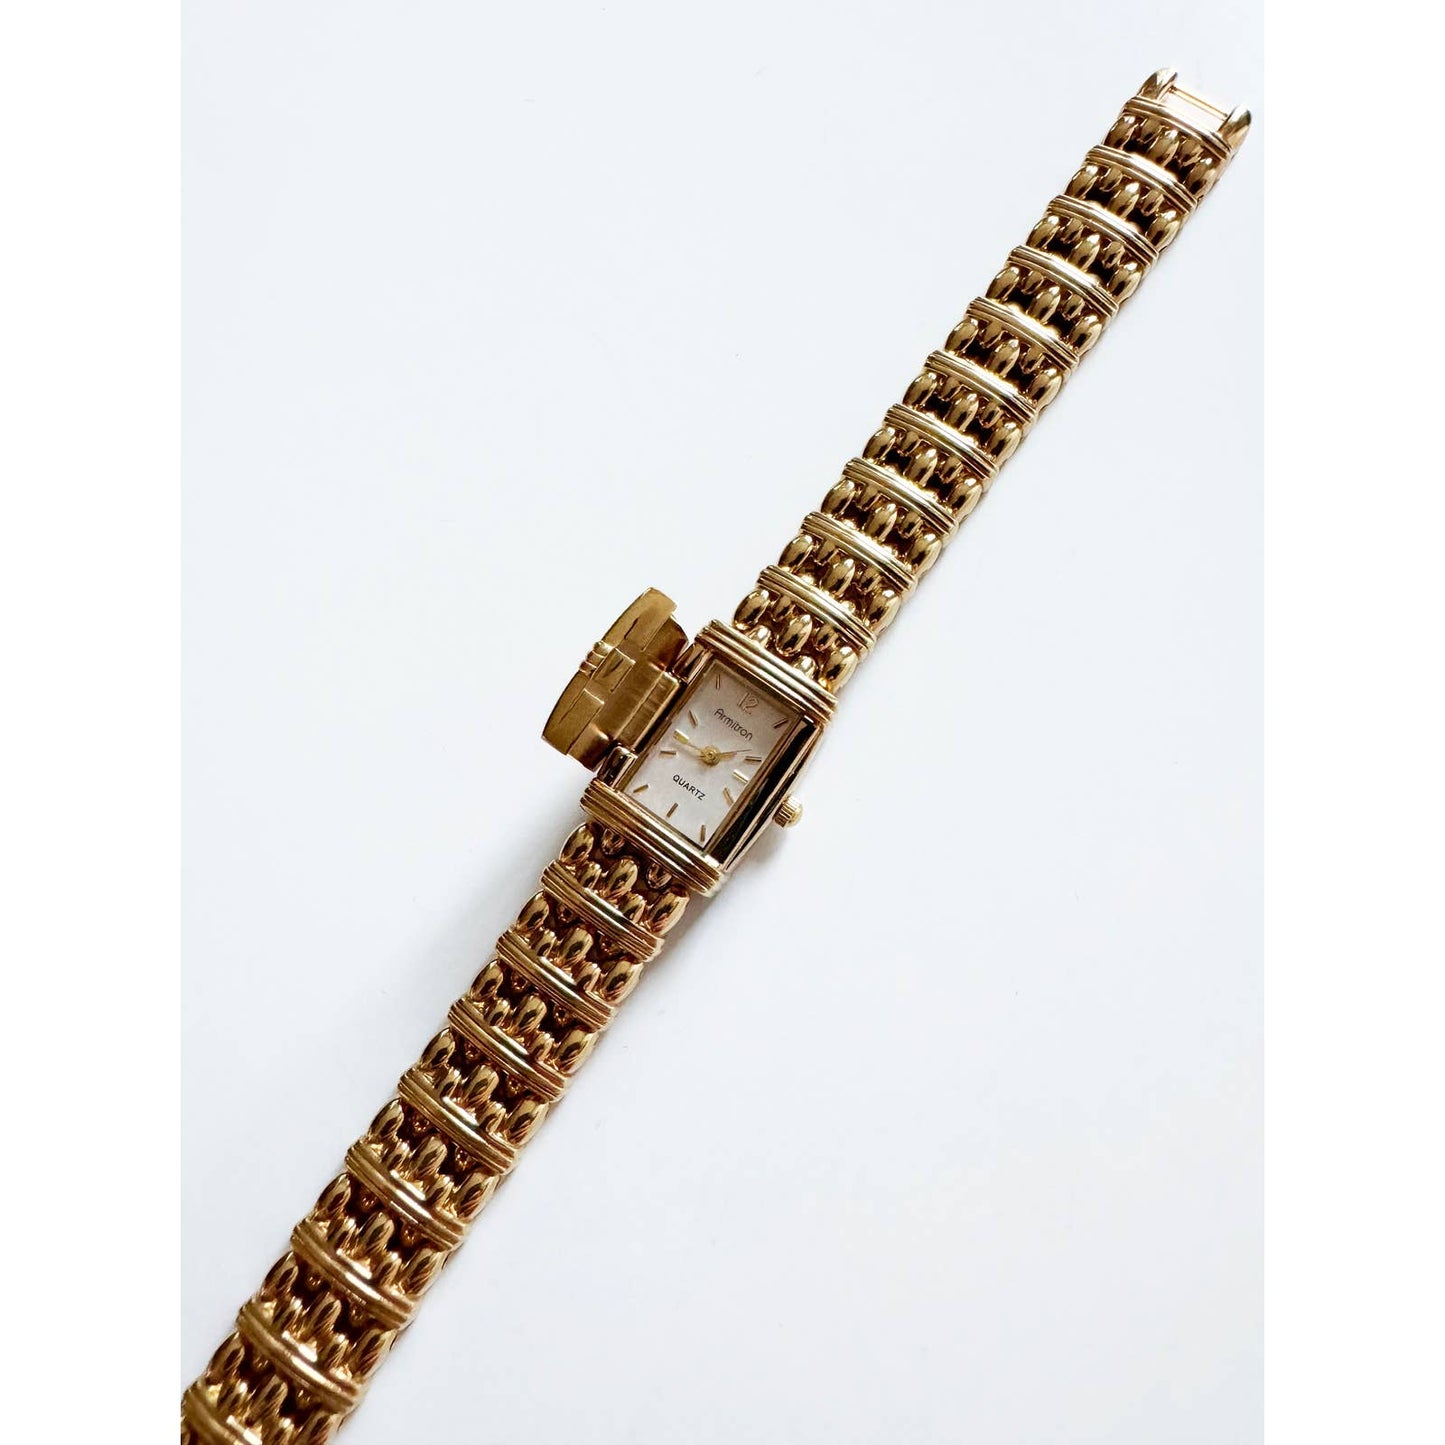 Vintage Gold Bracelet Watch with Rectangular Face | Armitron